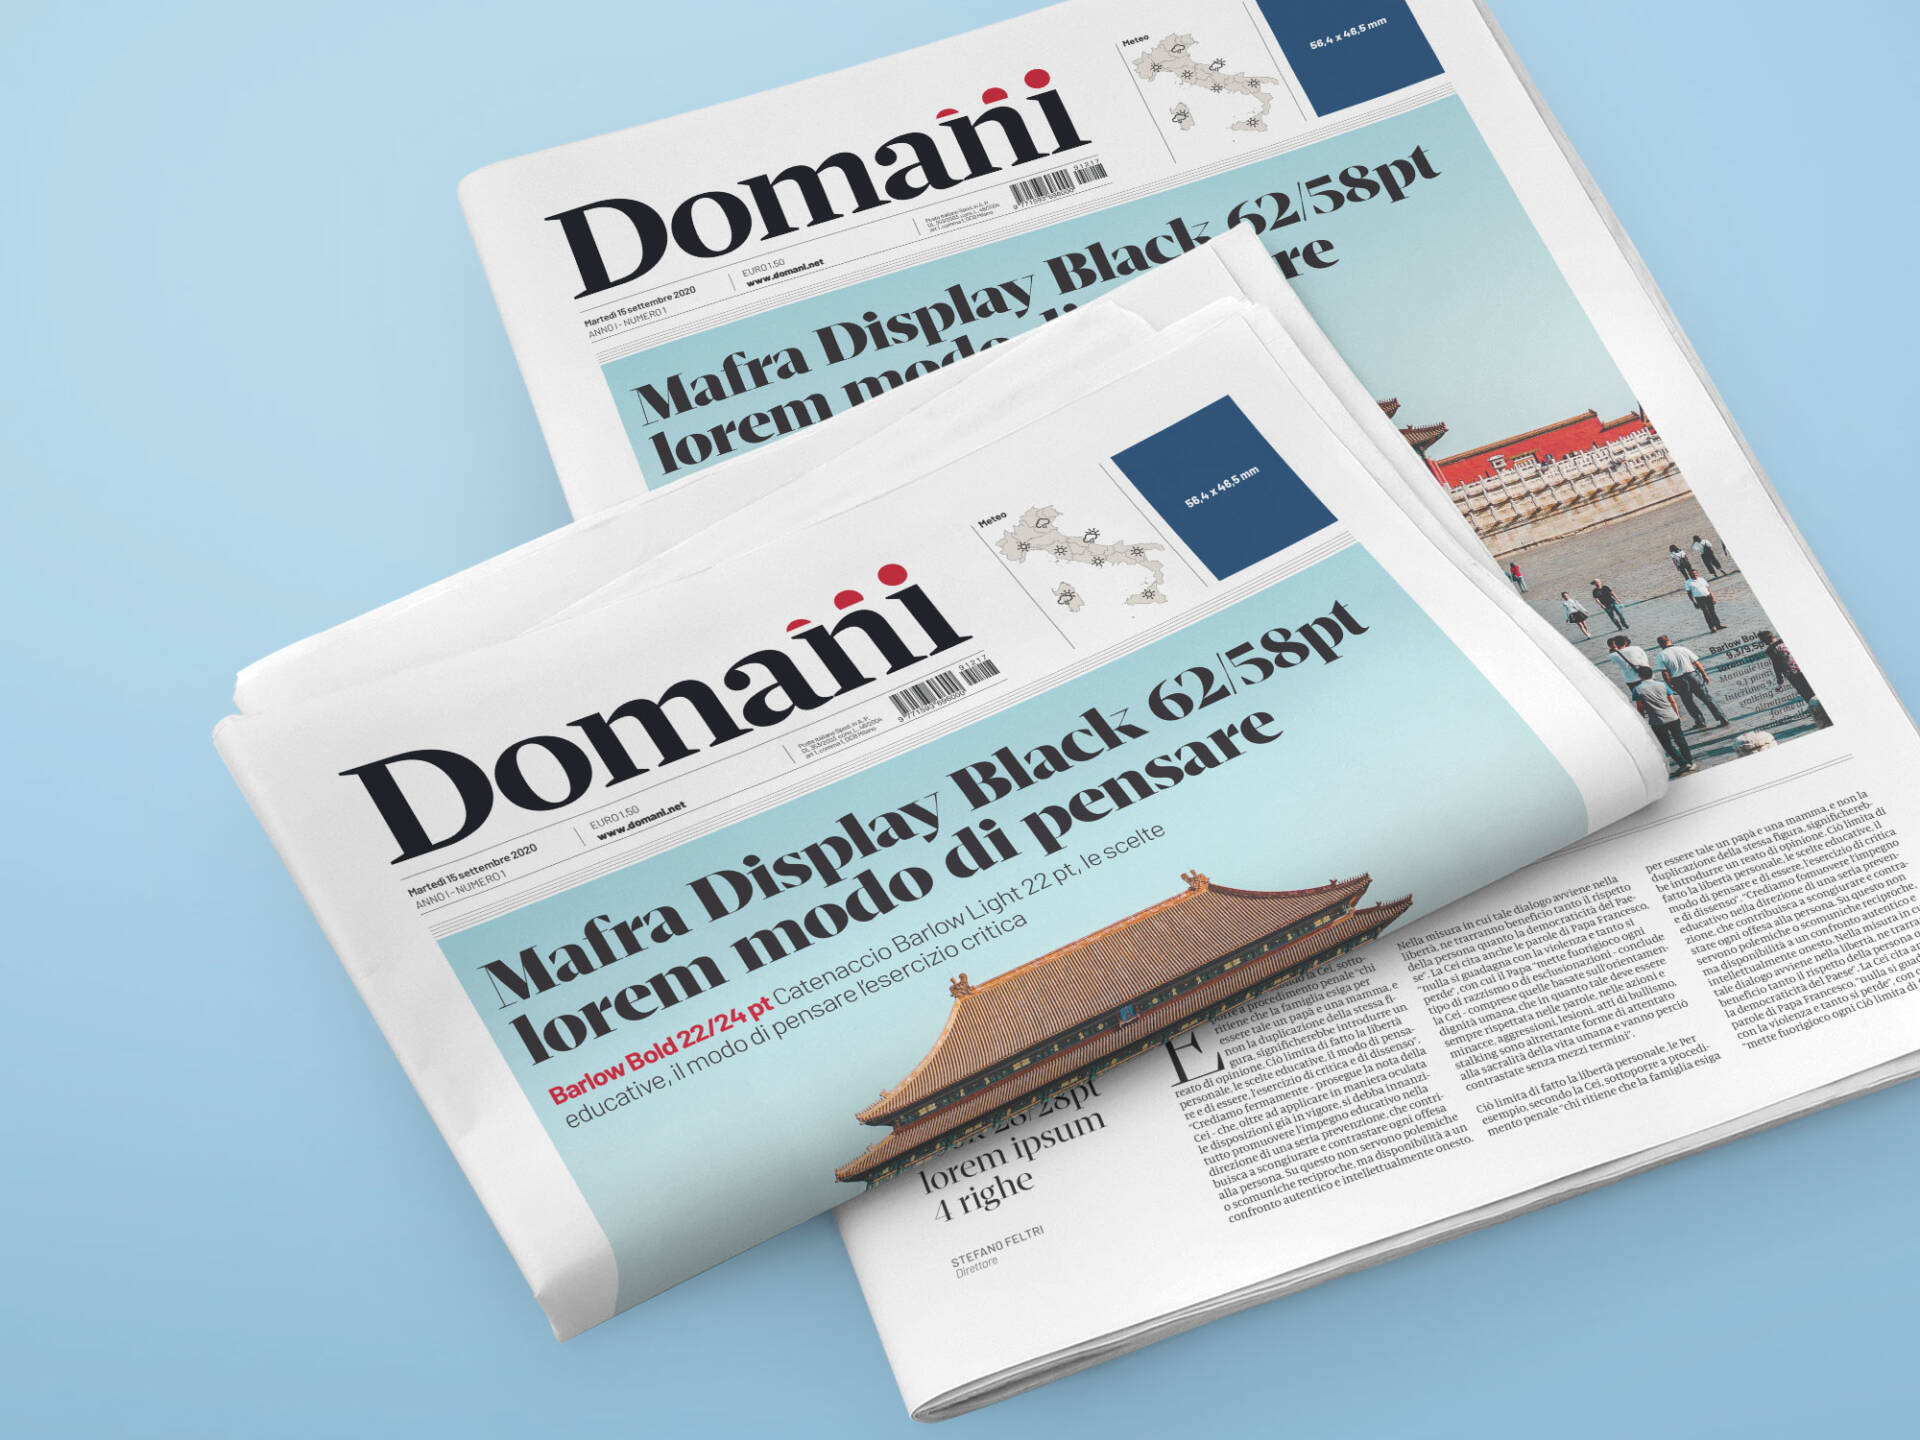 Domani_Print_Frontpage_Wenceslau_News_Design10